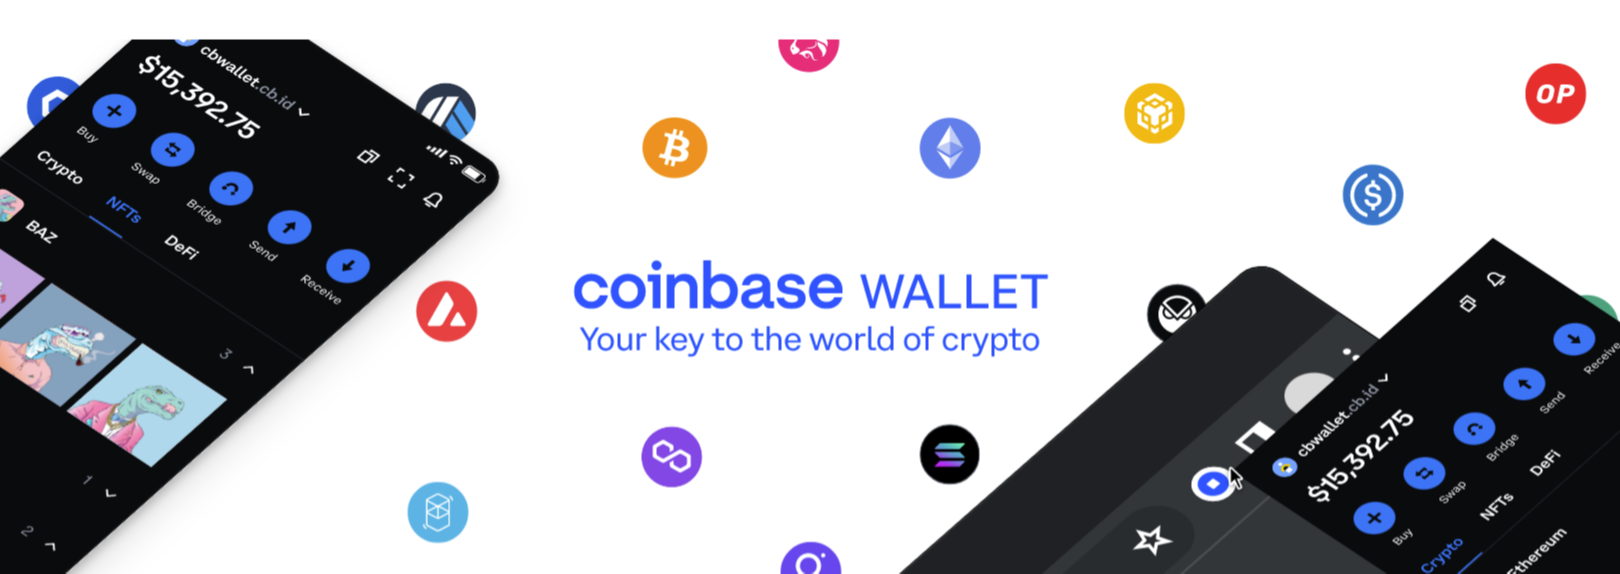 coinbase wallets review.